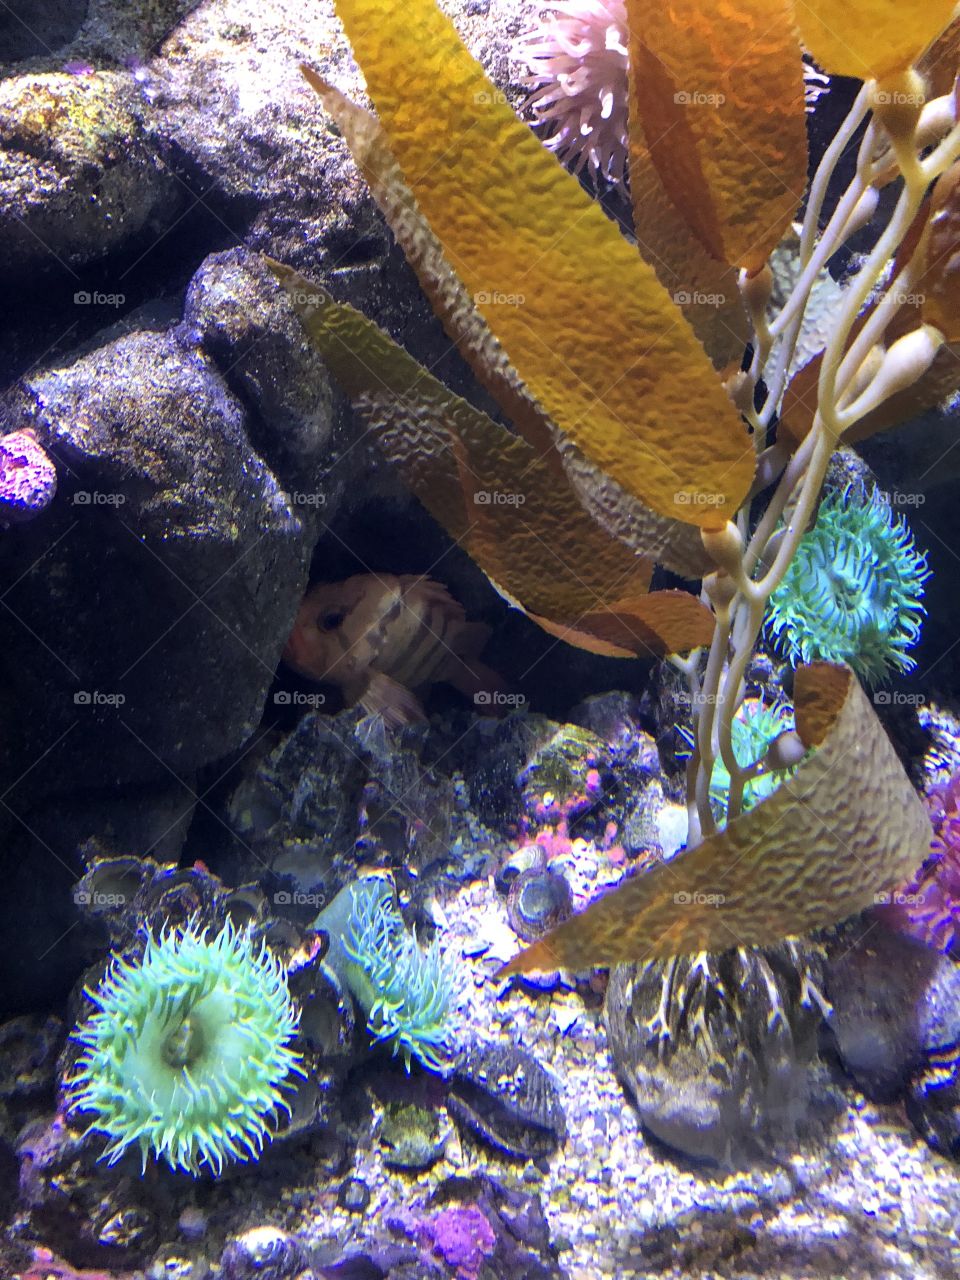 A shot of the fish and sea life in Boston’s aquarium!